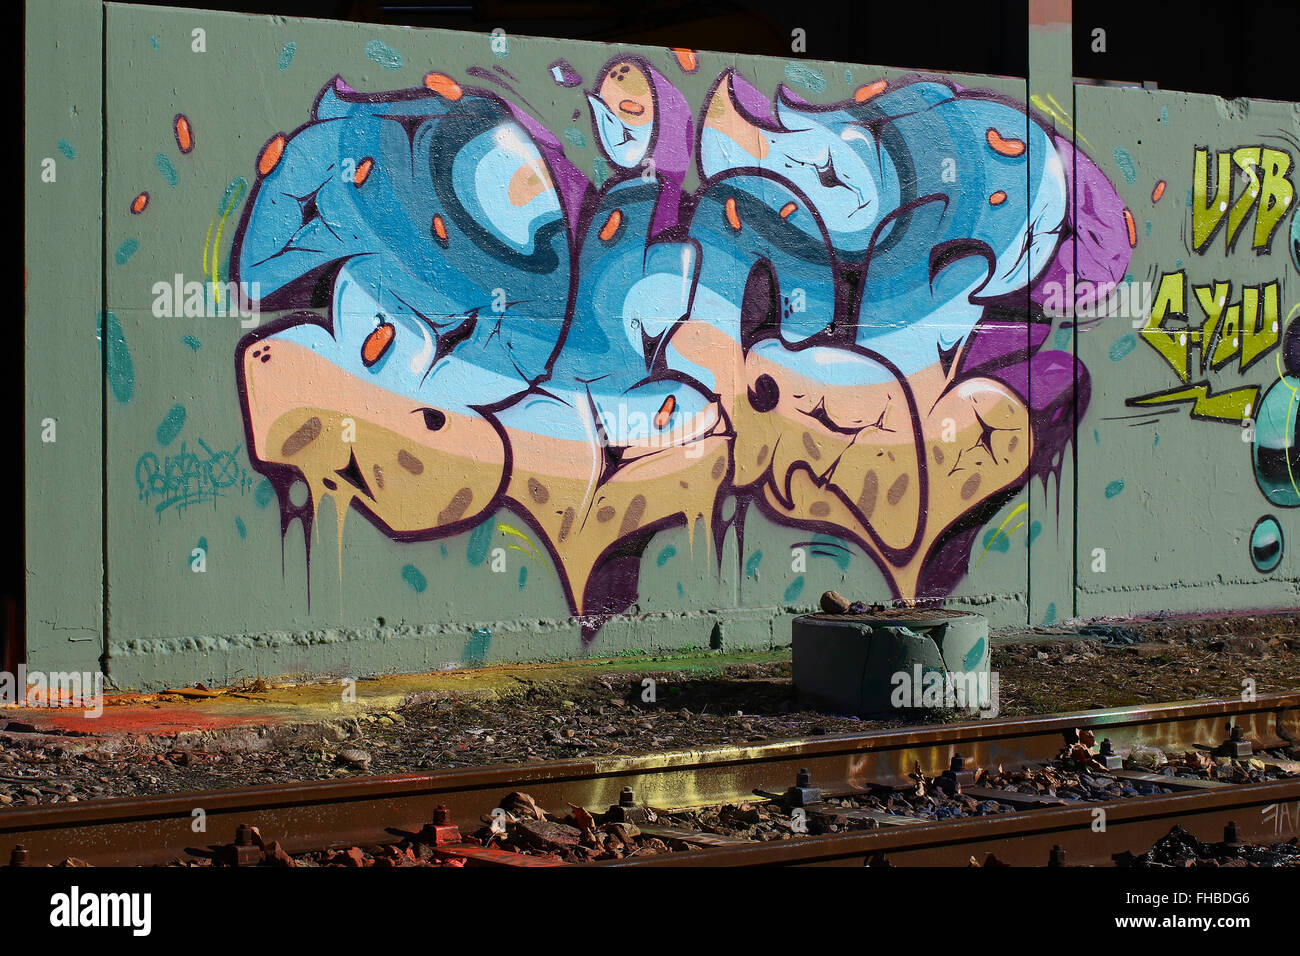 Cadenazzo, Switzerland, February 2016:Urban wall graffiti art along railroad tracks keep popping up Stock Photo